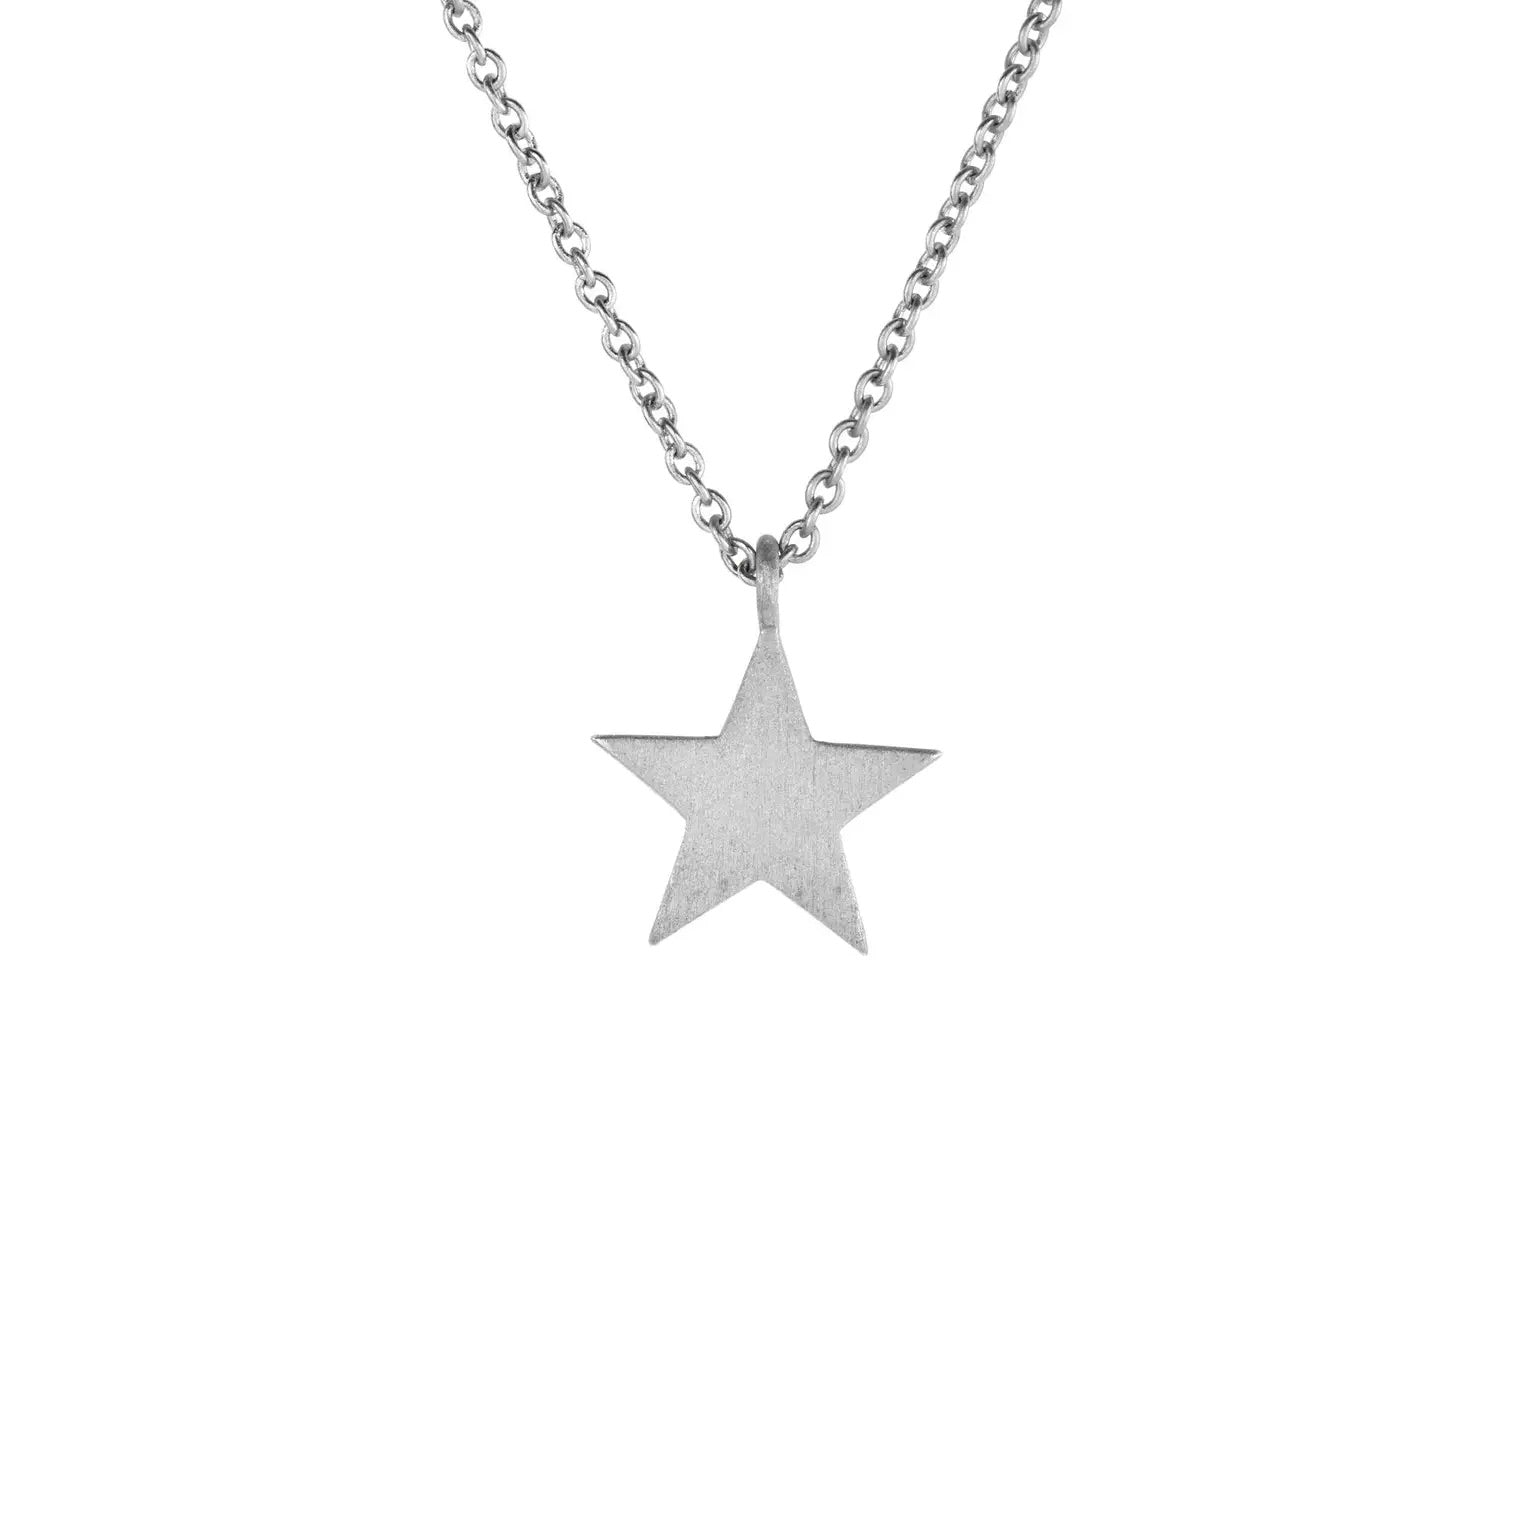 Dainty Star Necklace - 2 Styles